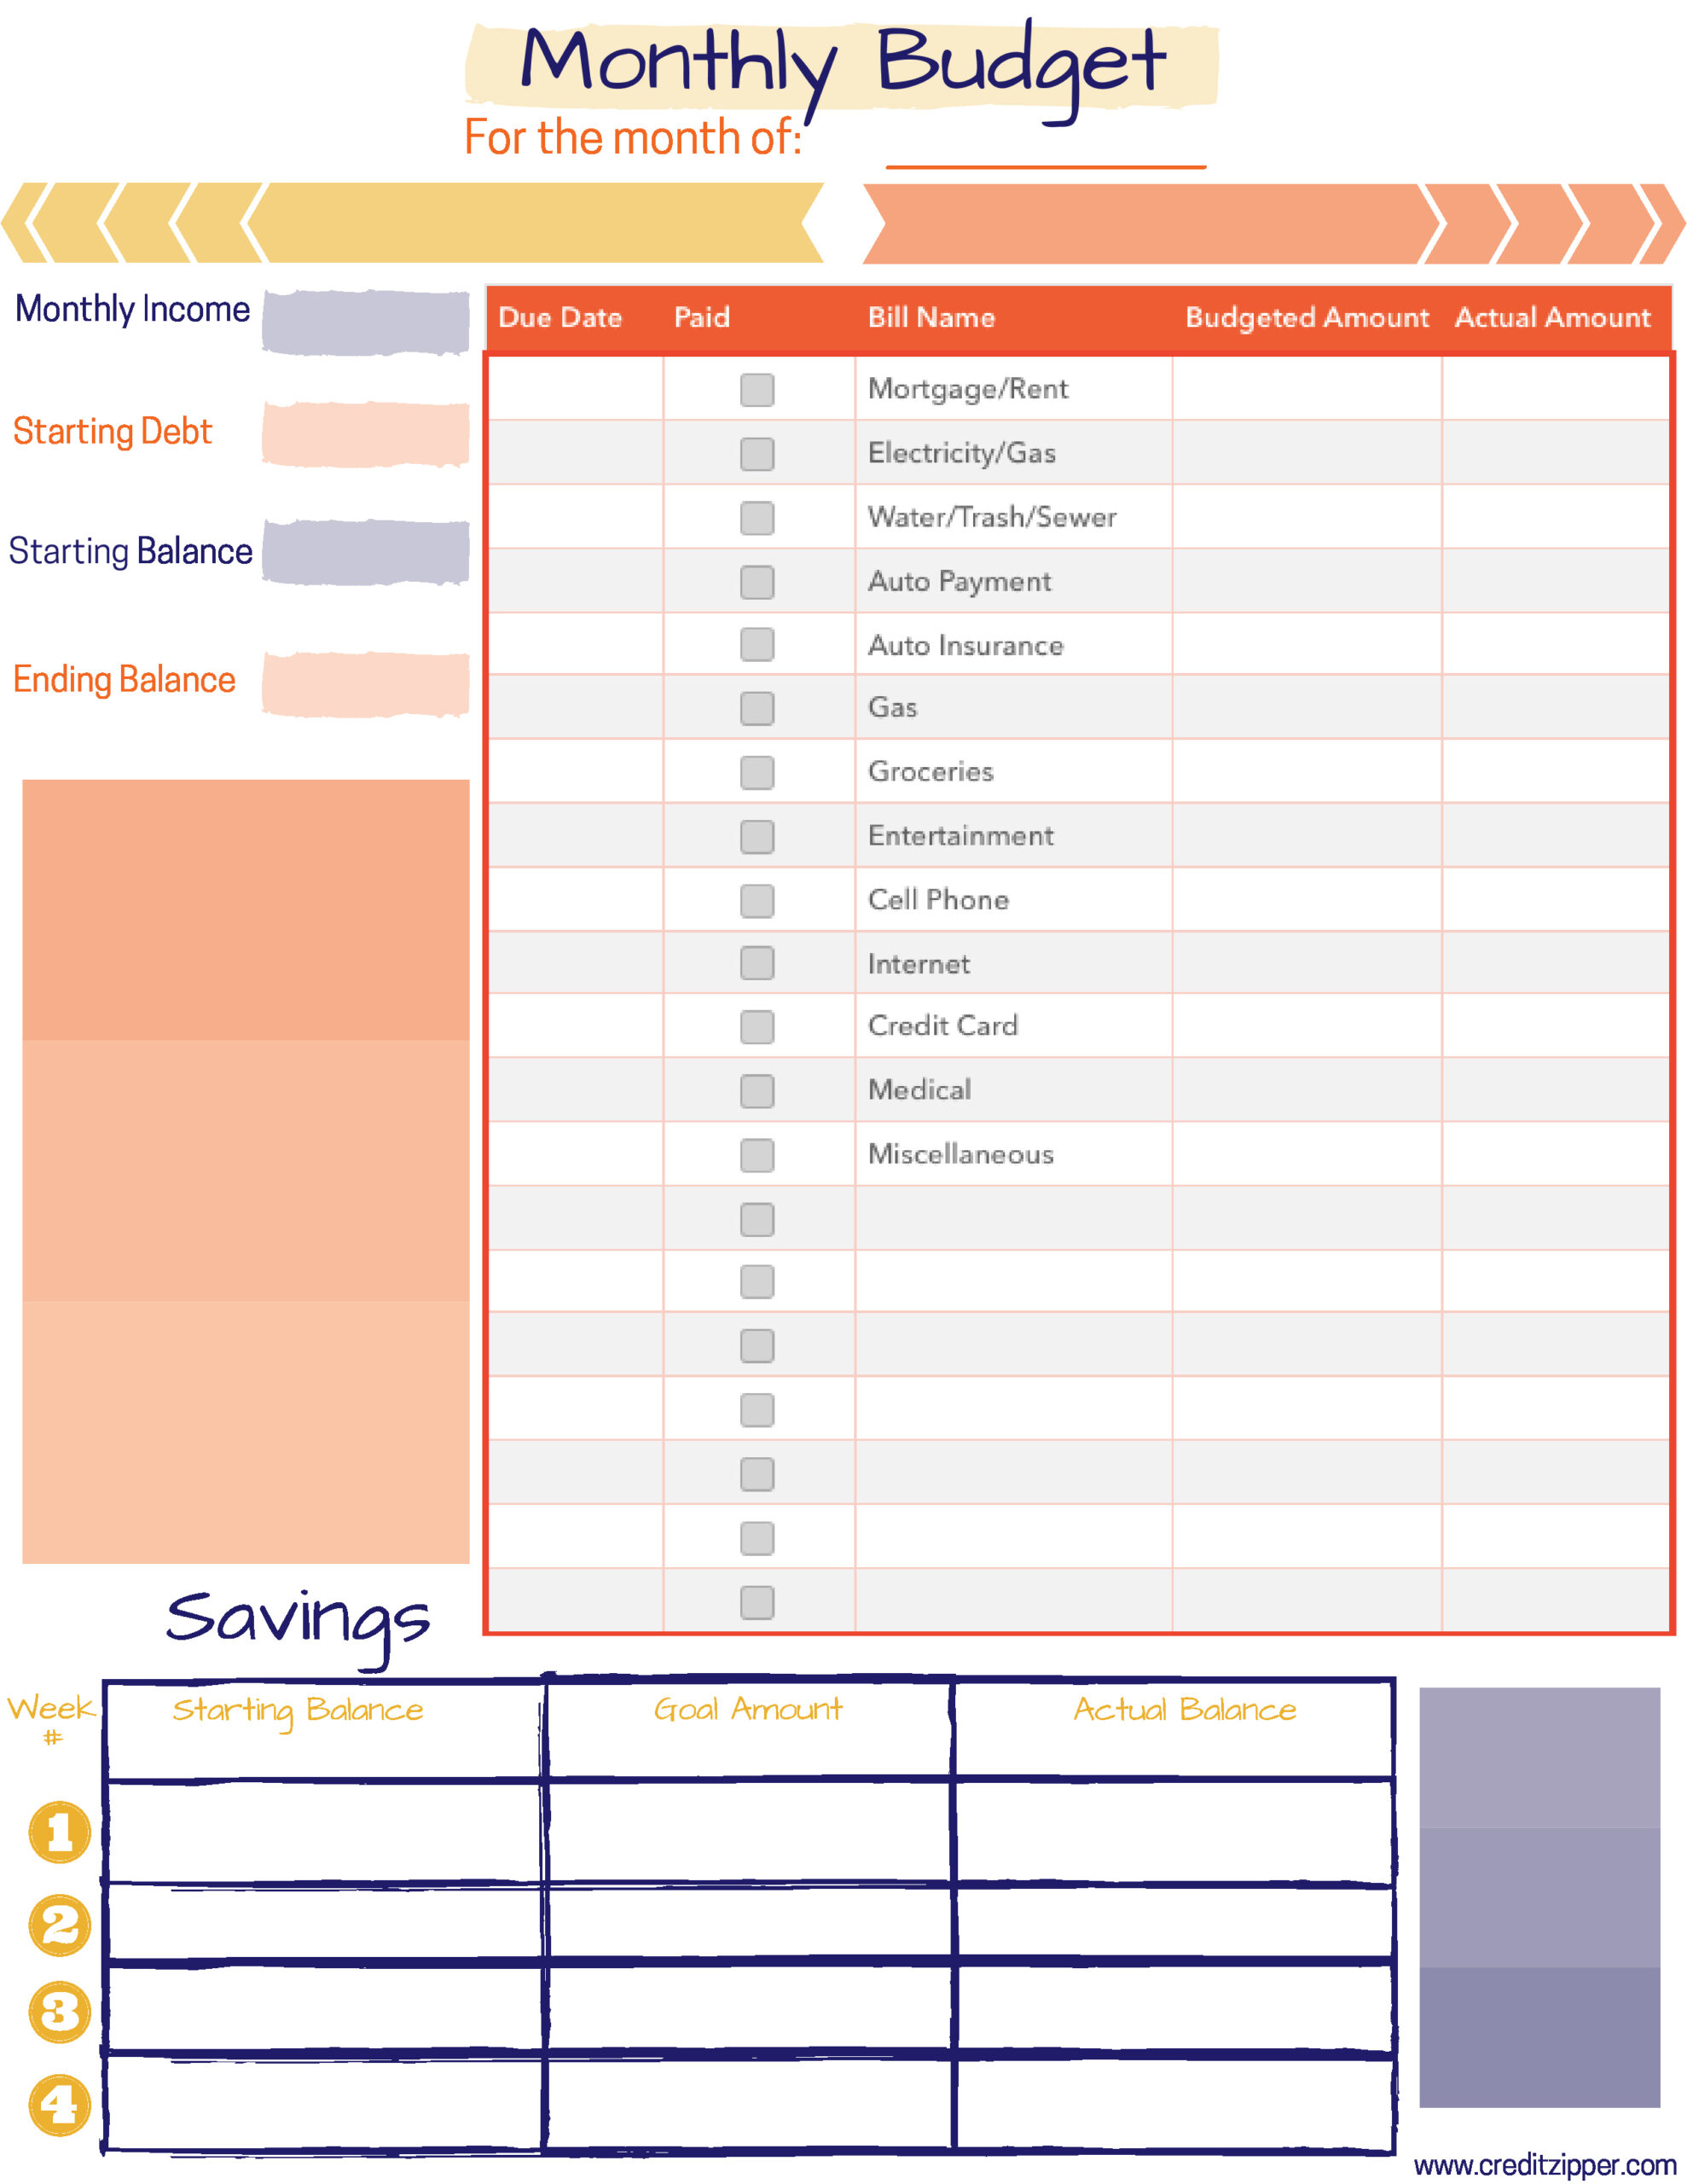 Free Monthly Budget Planner Printable | Credit Zipper avec Budget Planner Pdf Gratuit